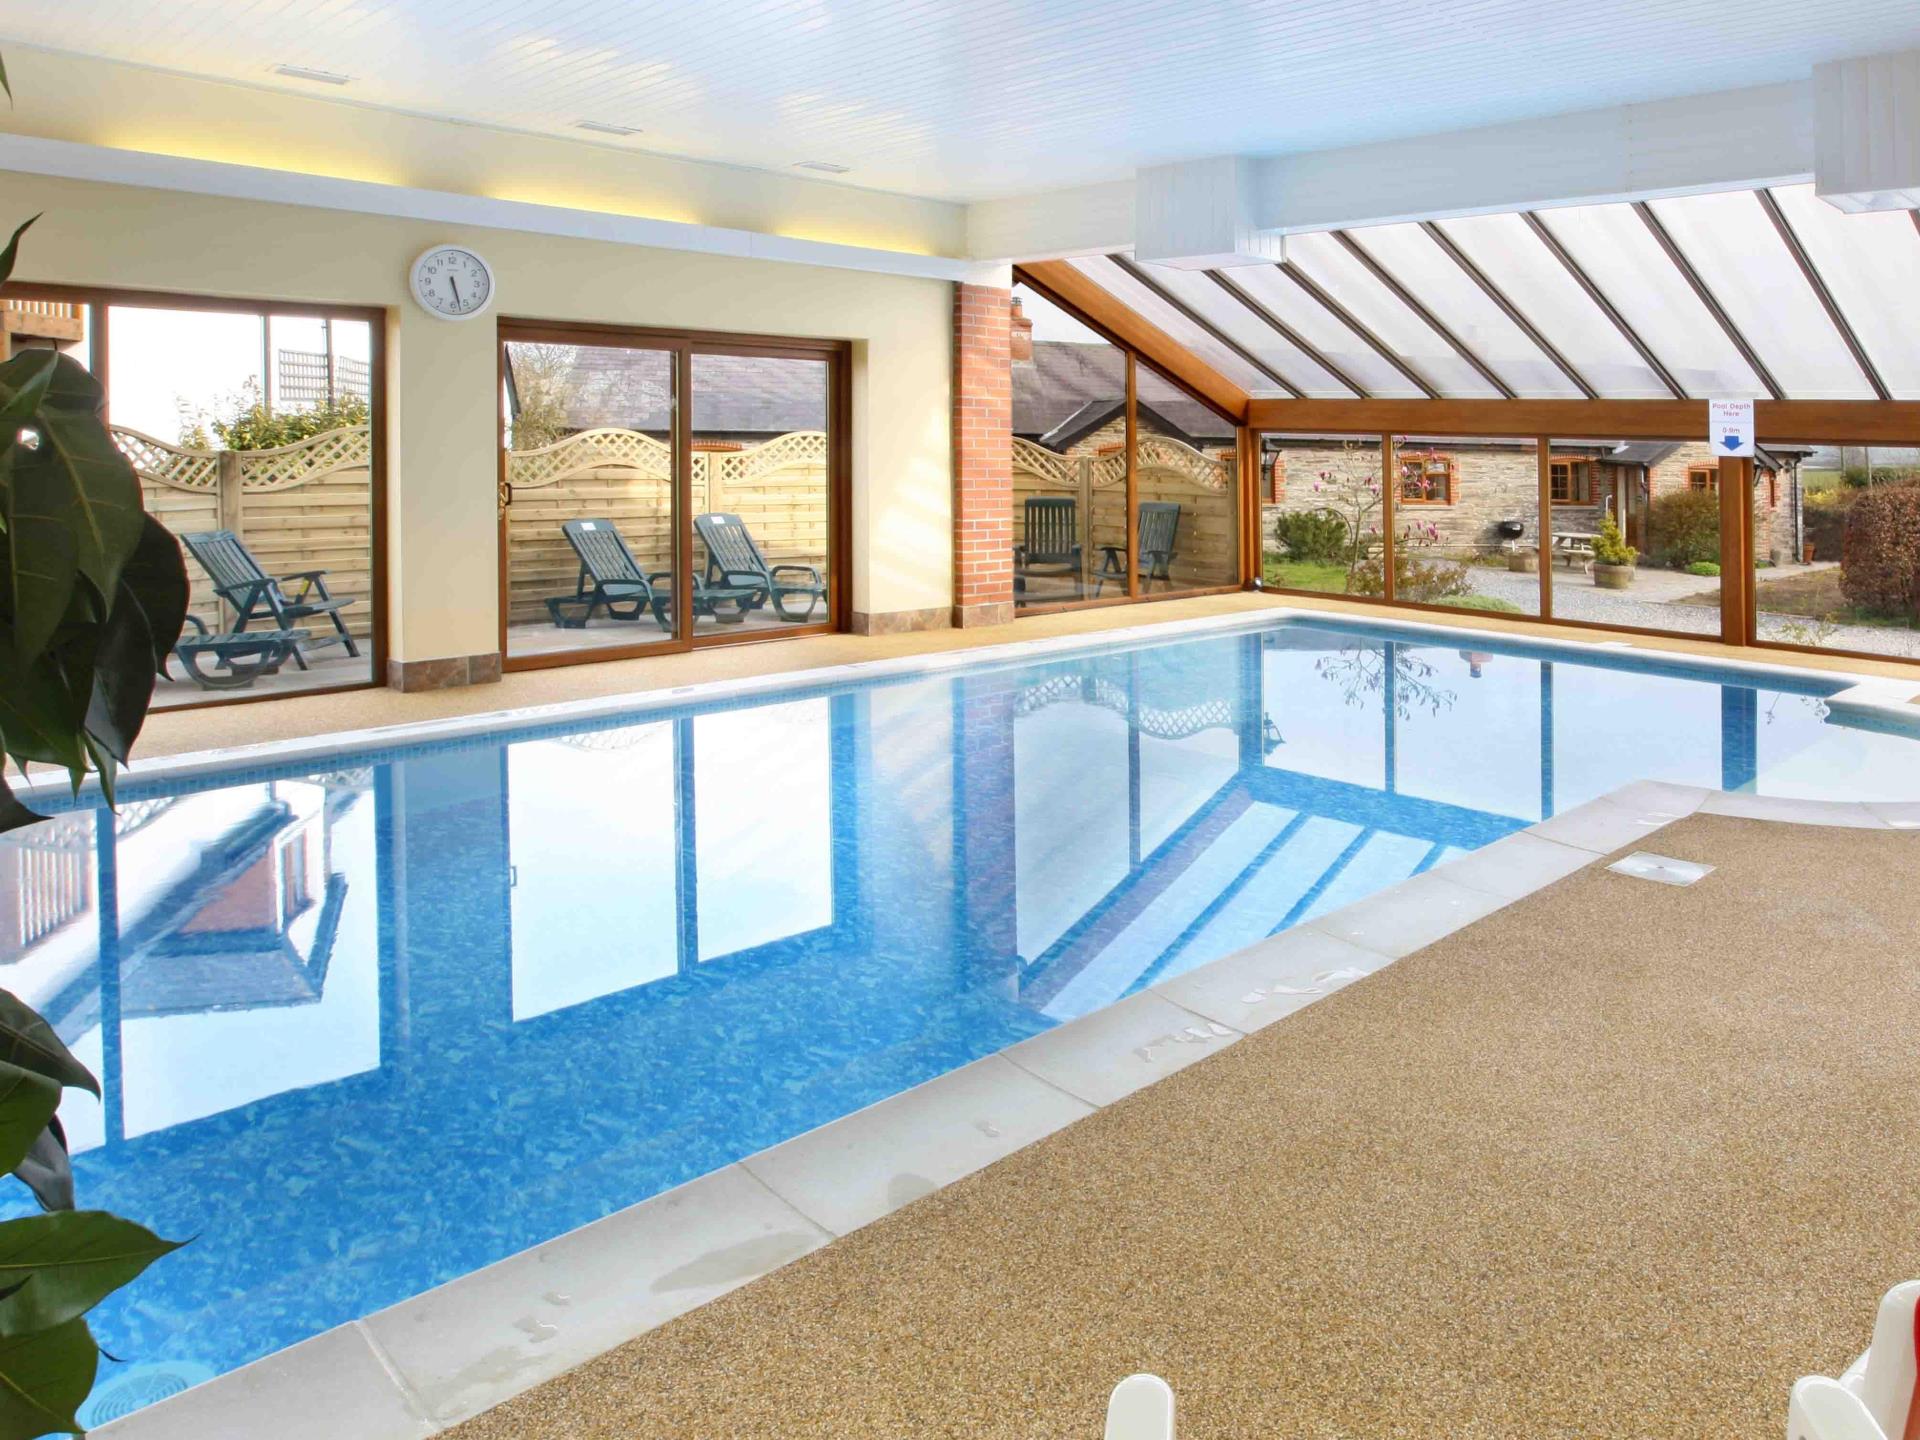 Heated indoor swimming pool 